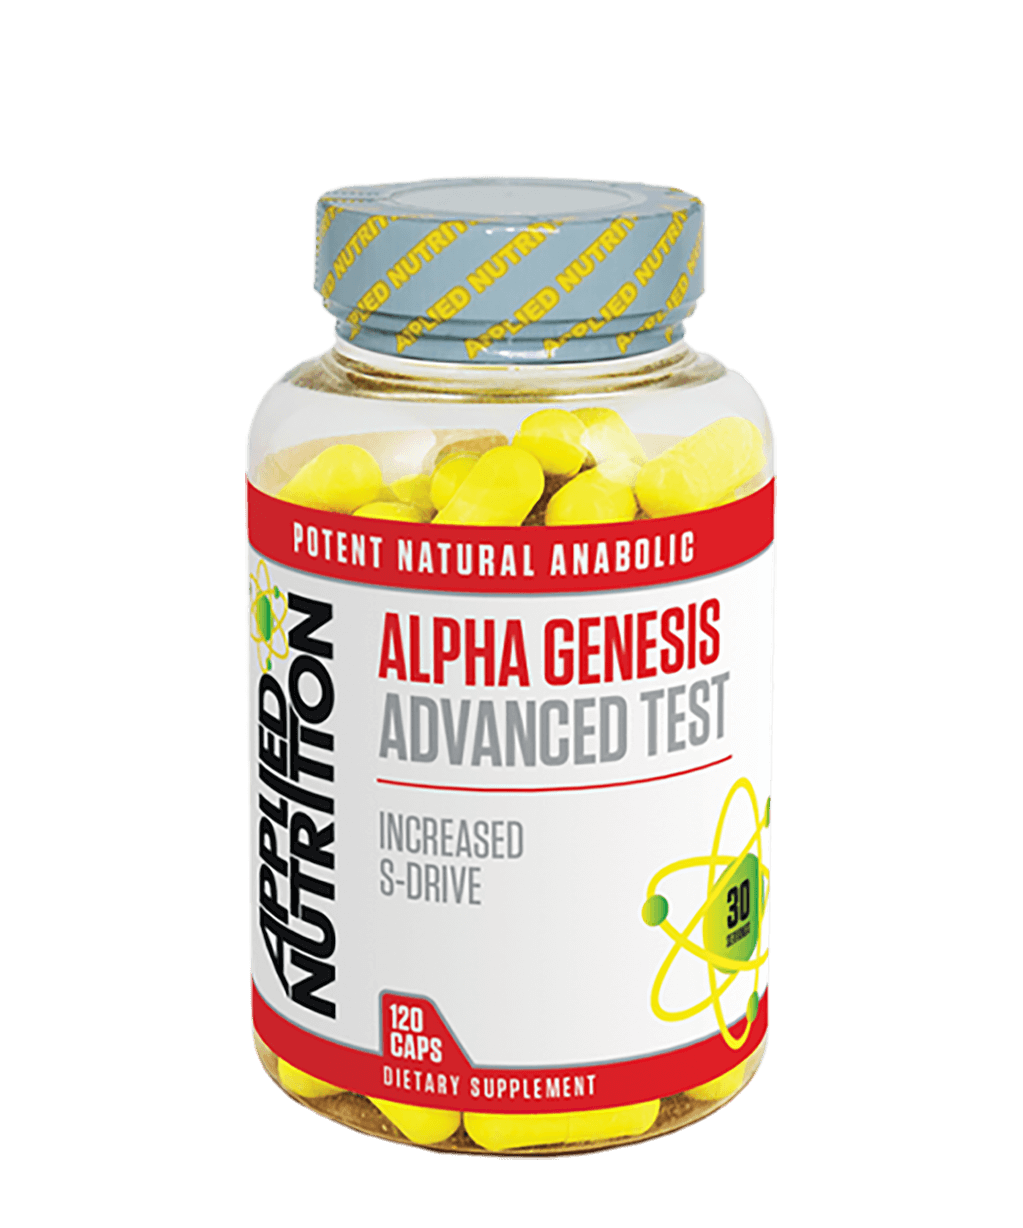 Alpha Genesis Advanced Test